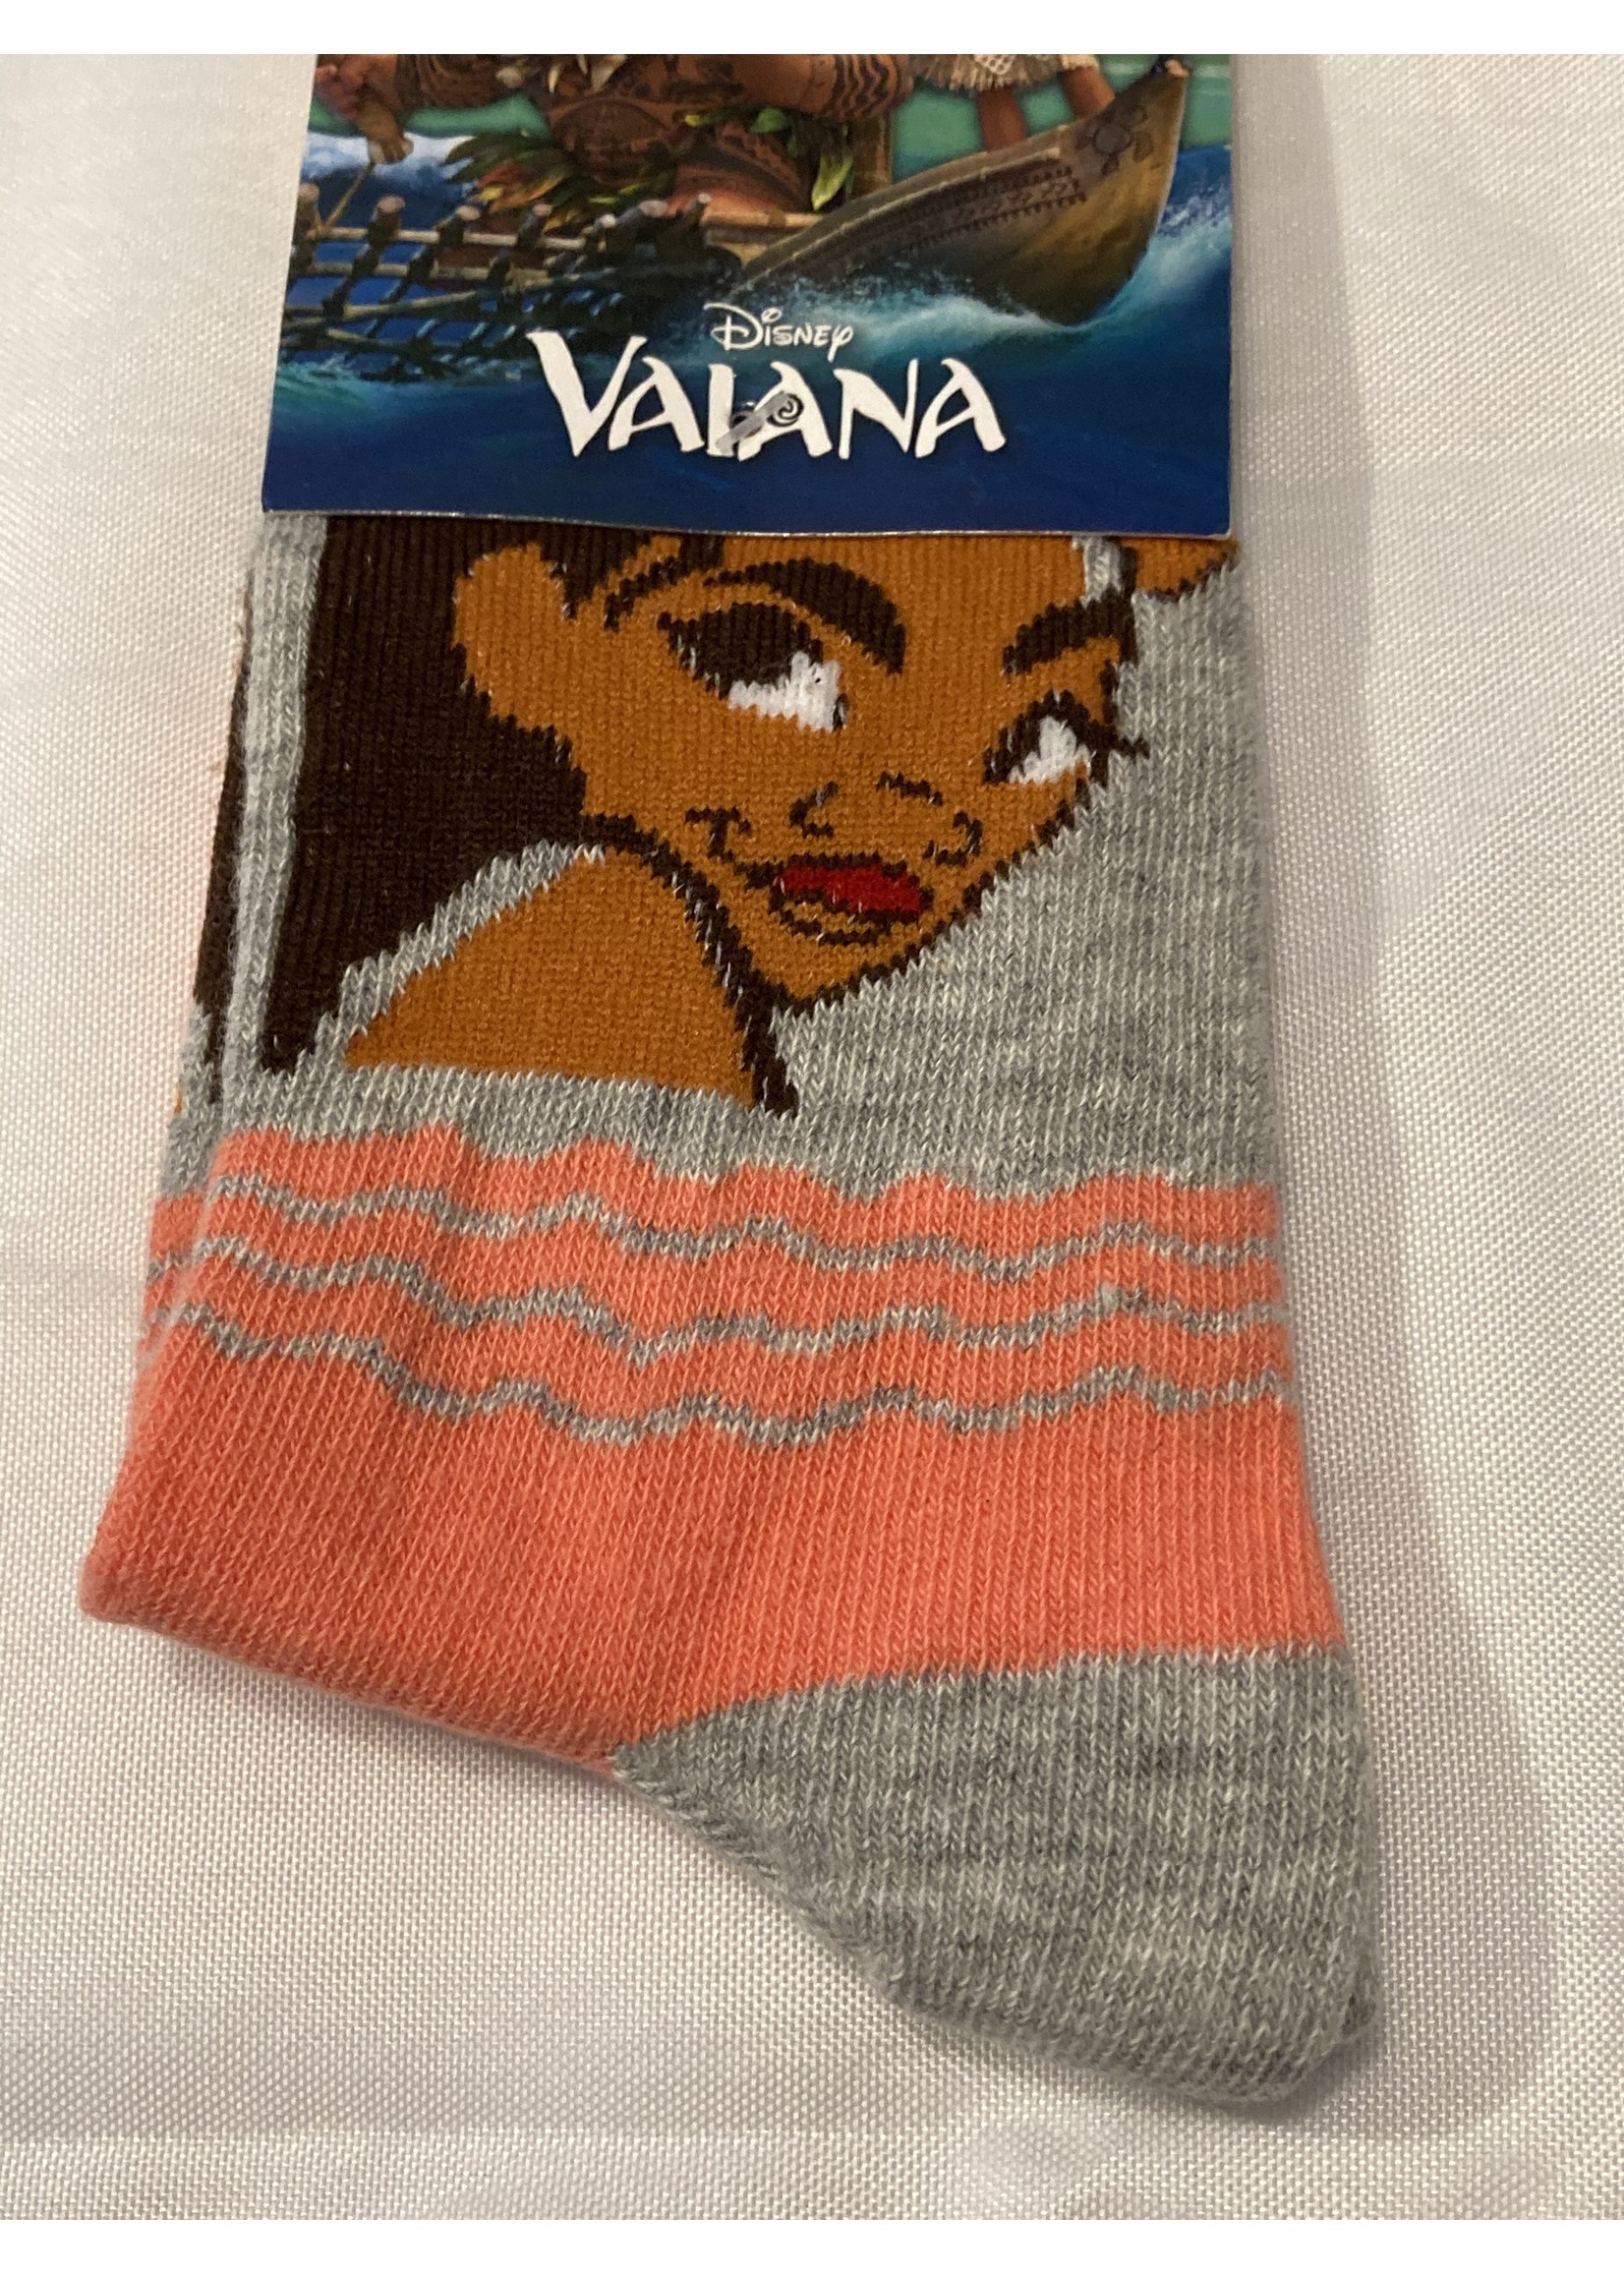 Disney Moana socks from Disney orange-grey